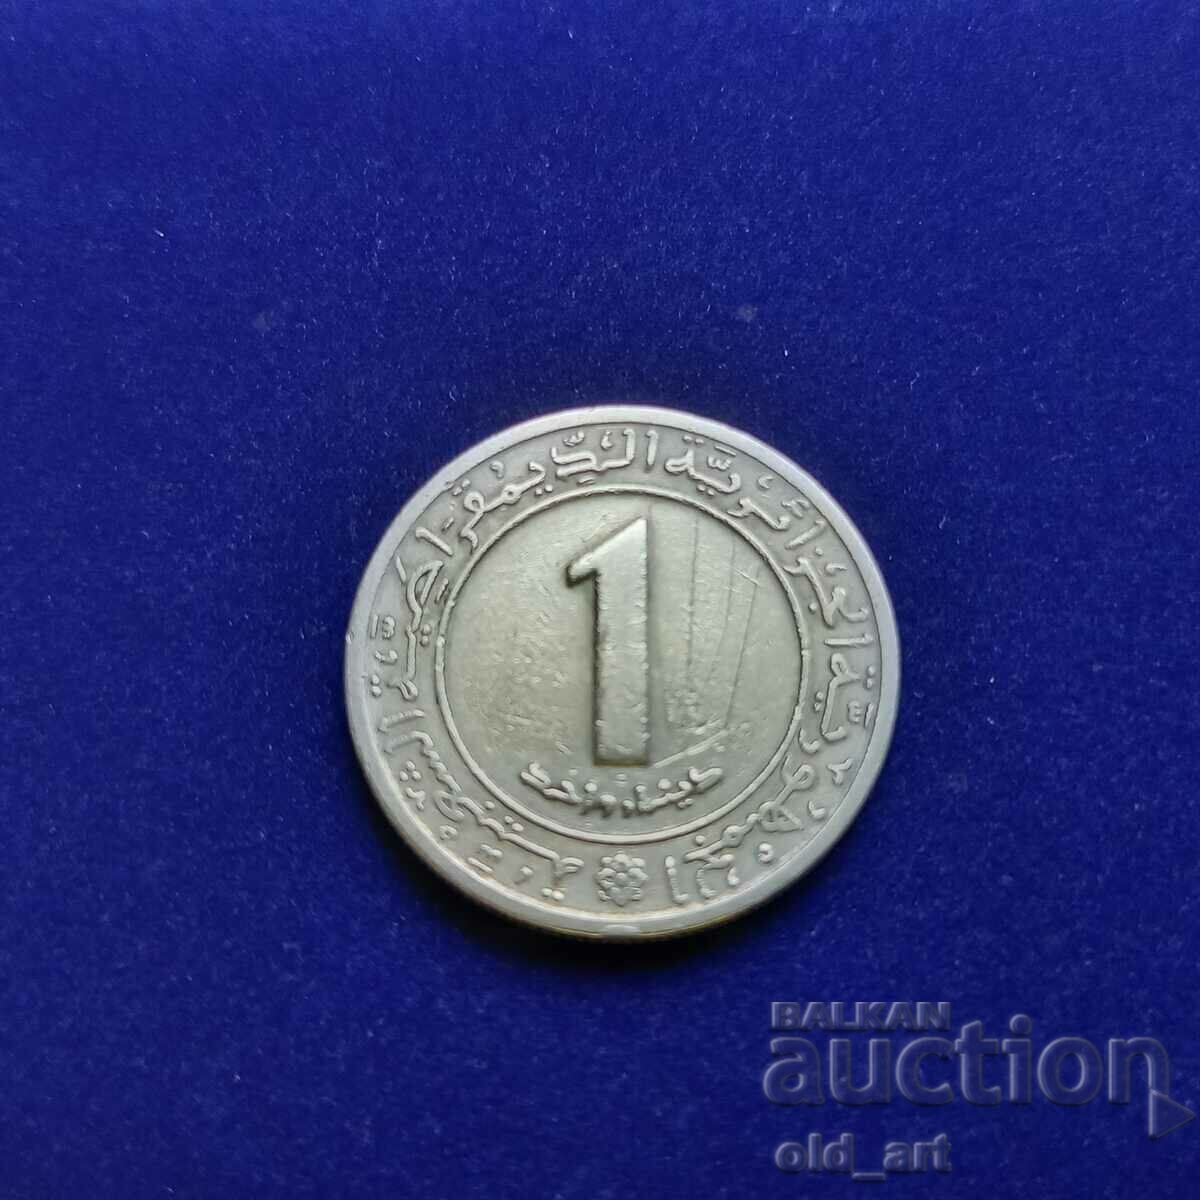 Coin - Algeria, 1 dinar 1972, commemorative, land reform